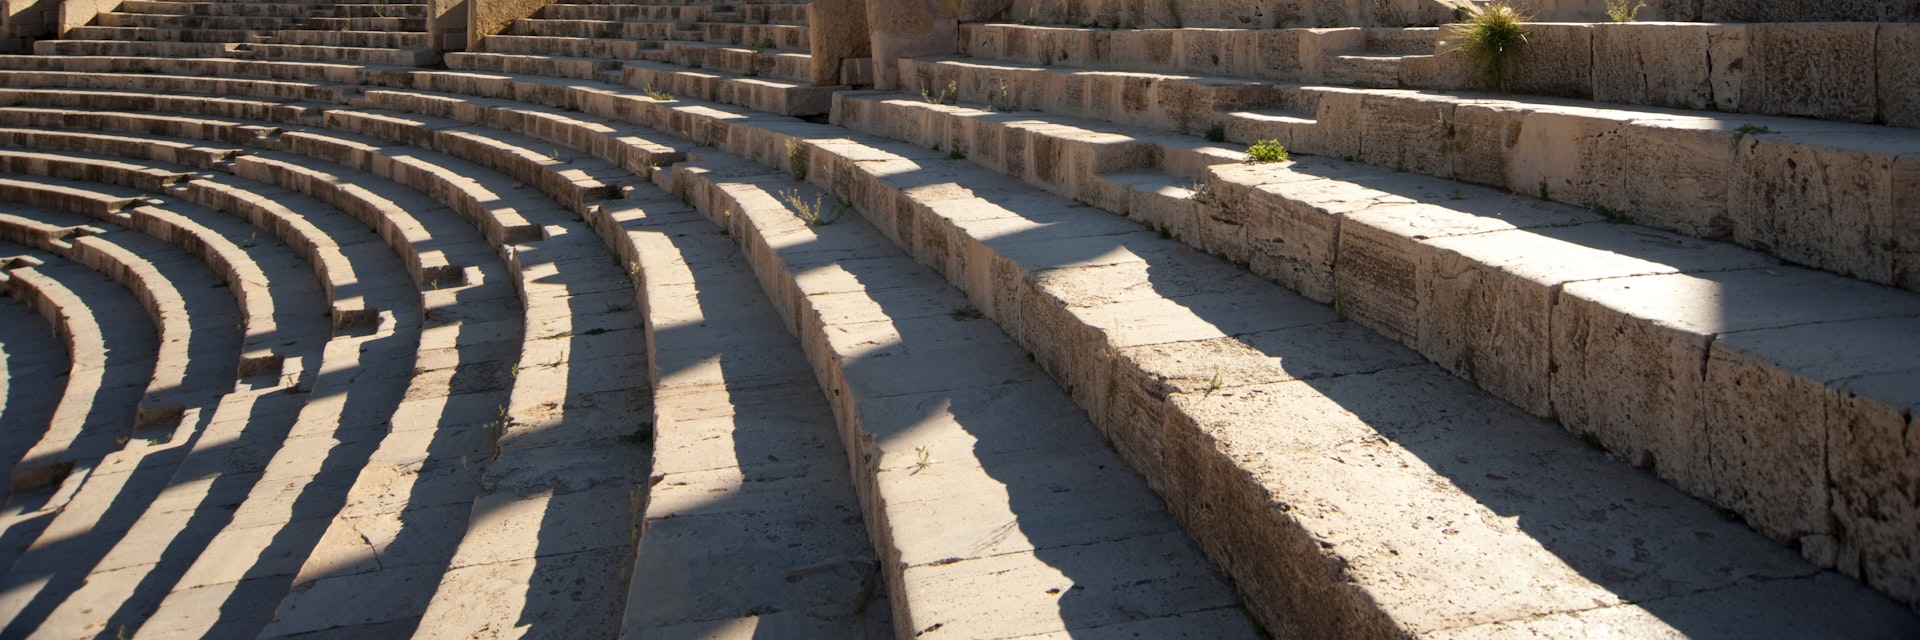 Steps of Roman ampitheatre.